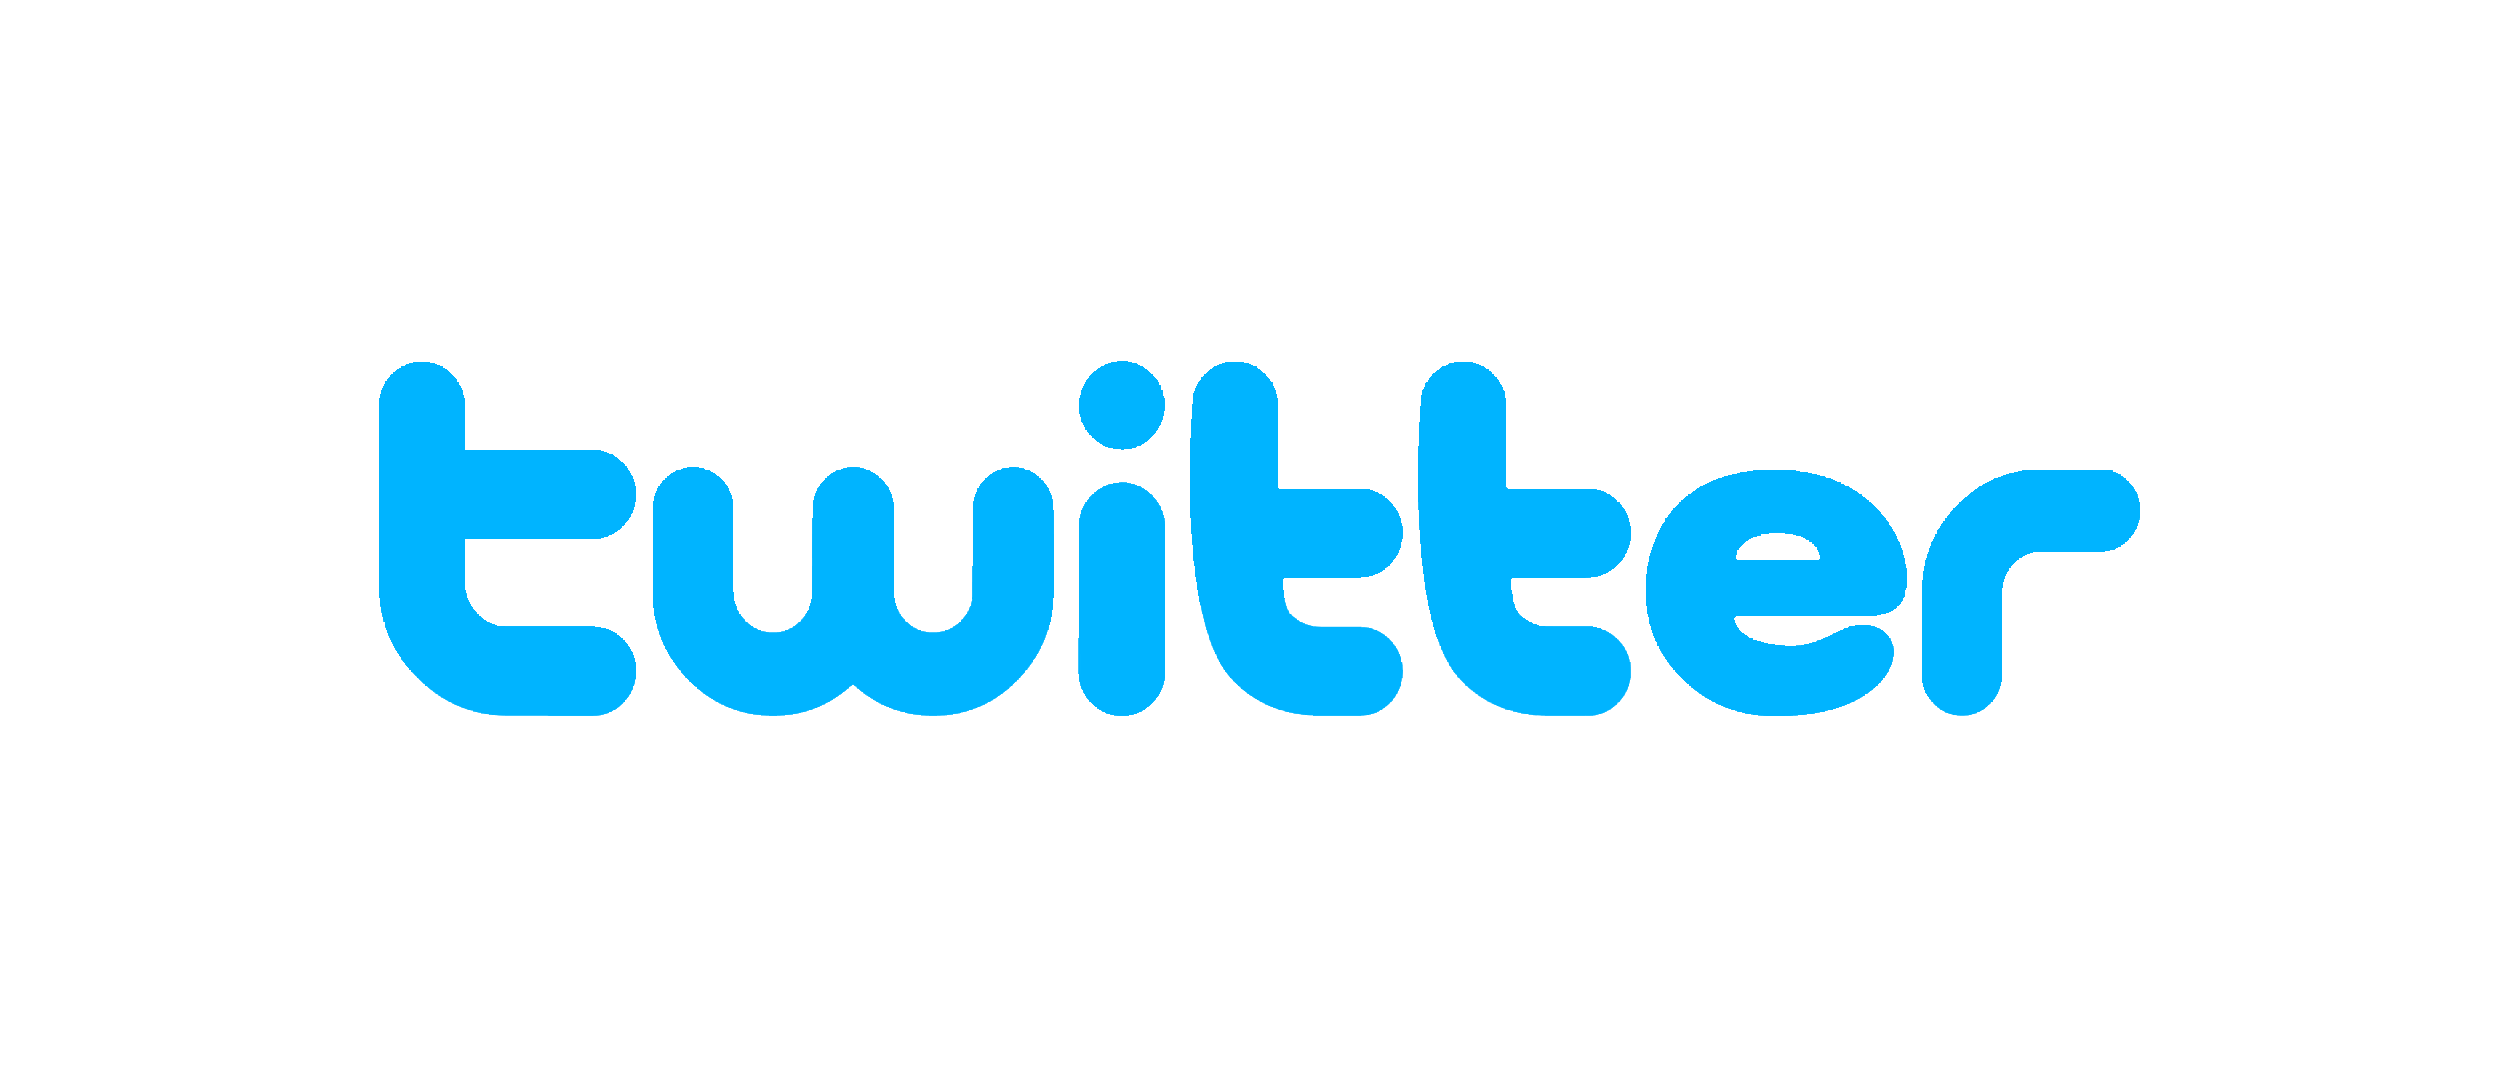 New Twitter Logo - Twitter Logo Logospikecom Famous And Free Vector Logos Logo Image ...